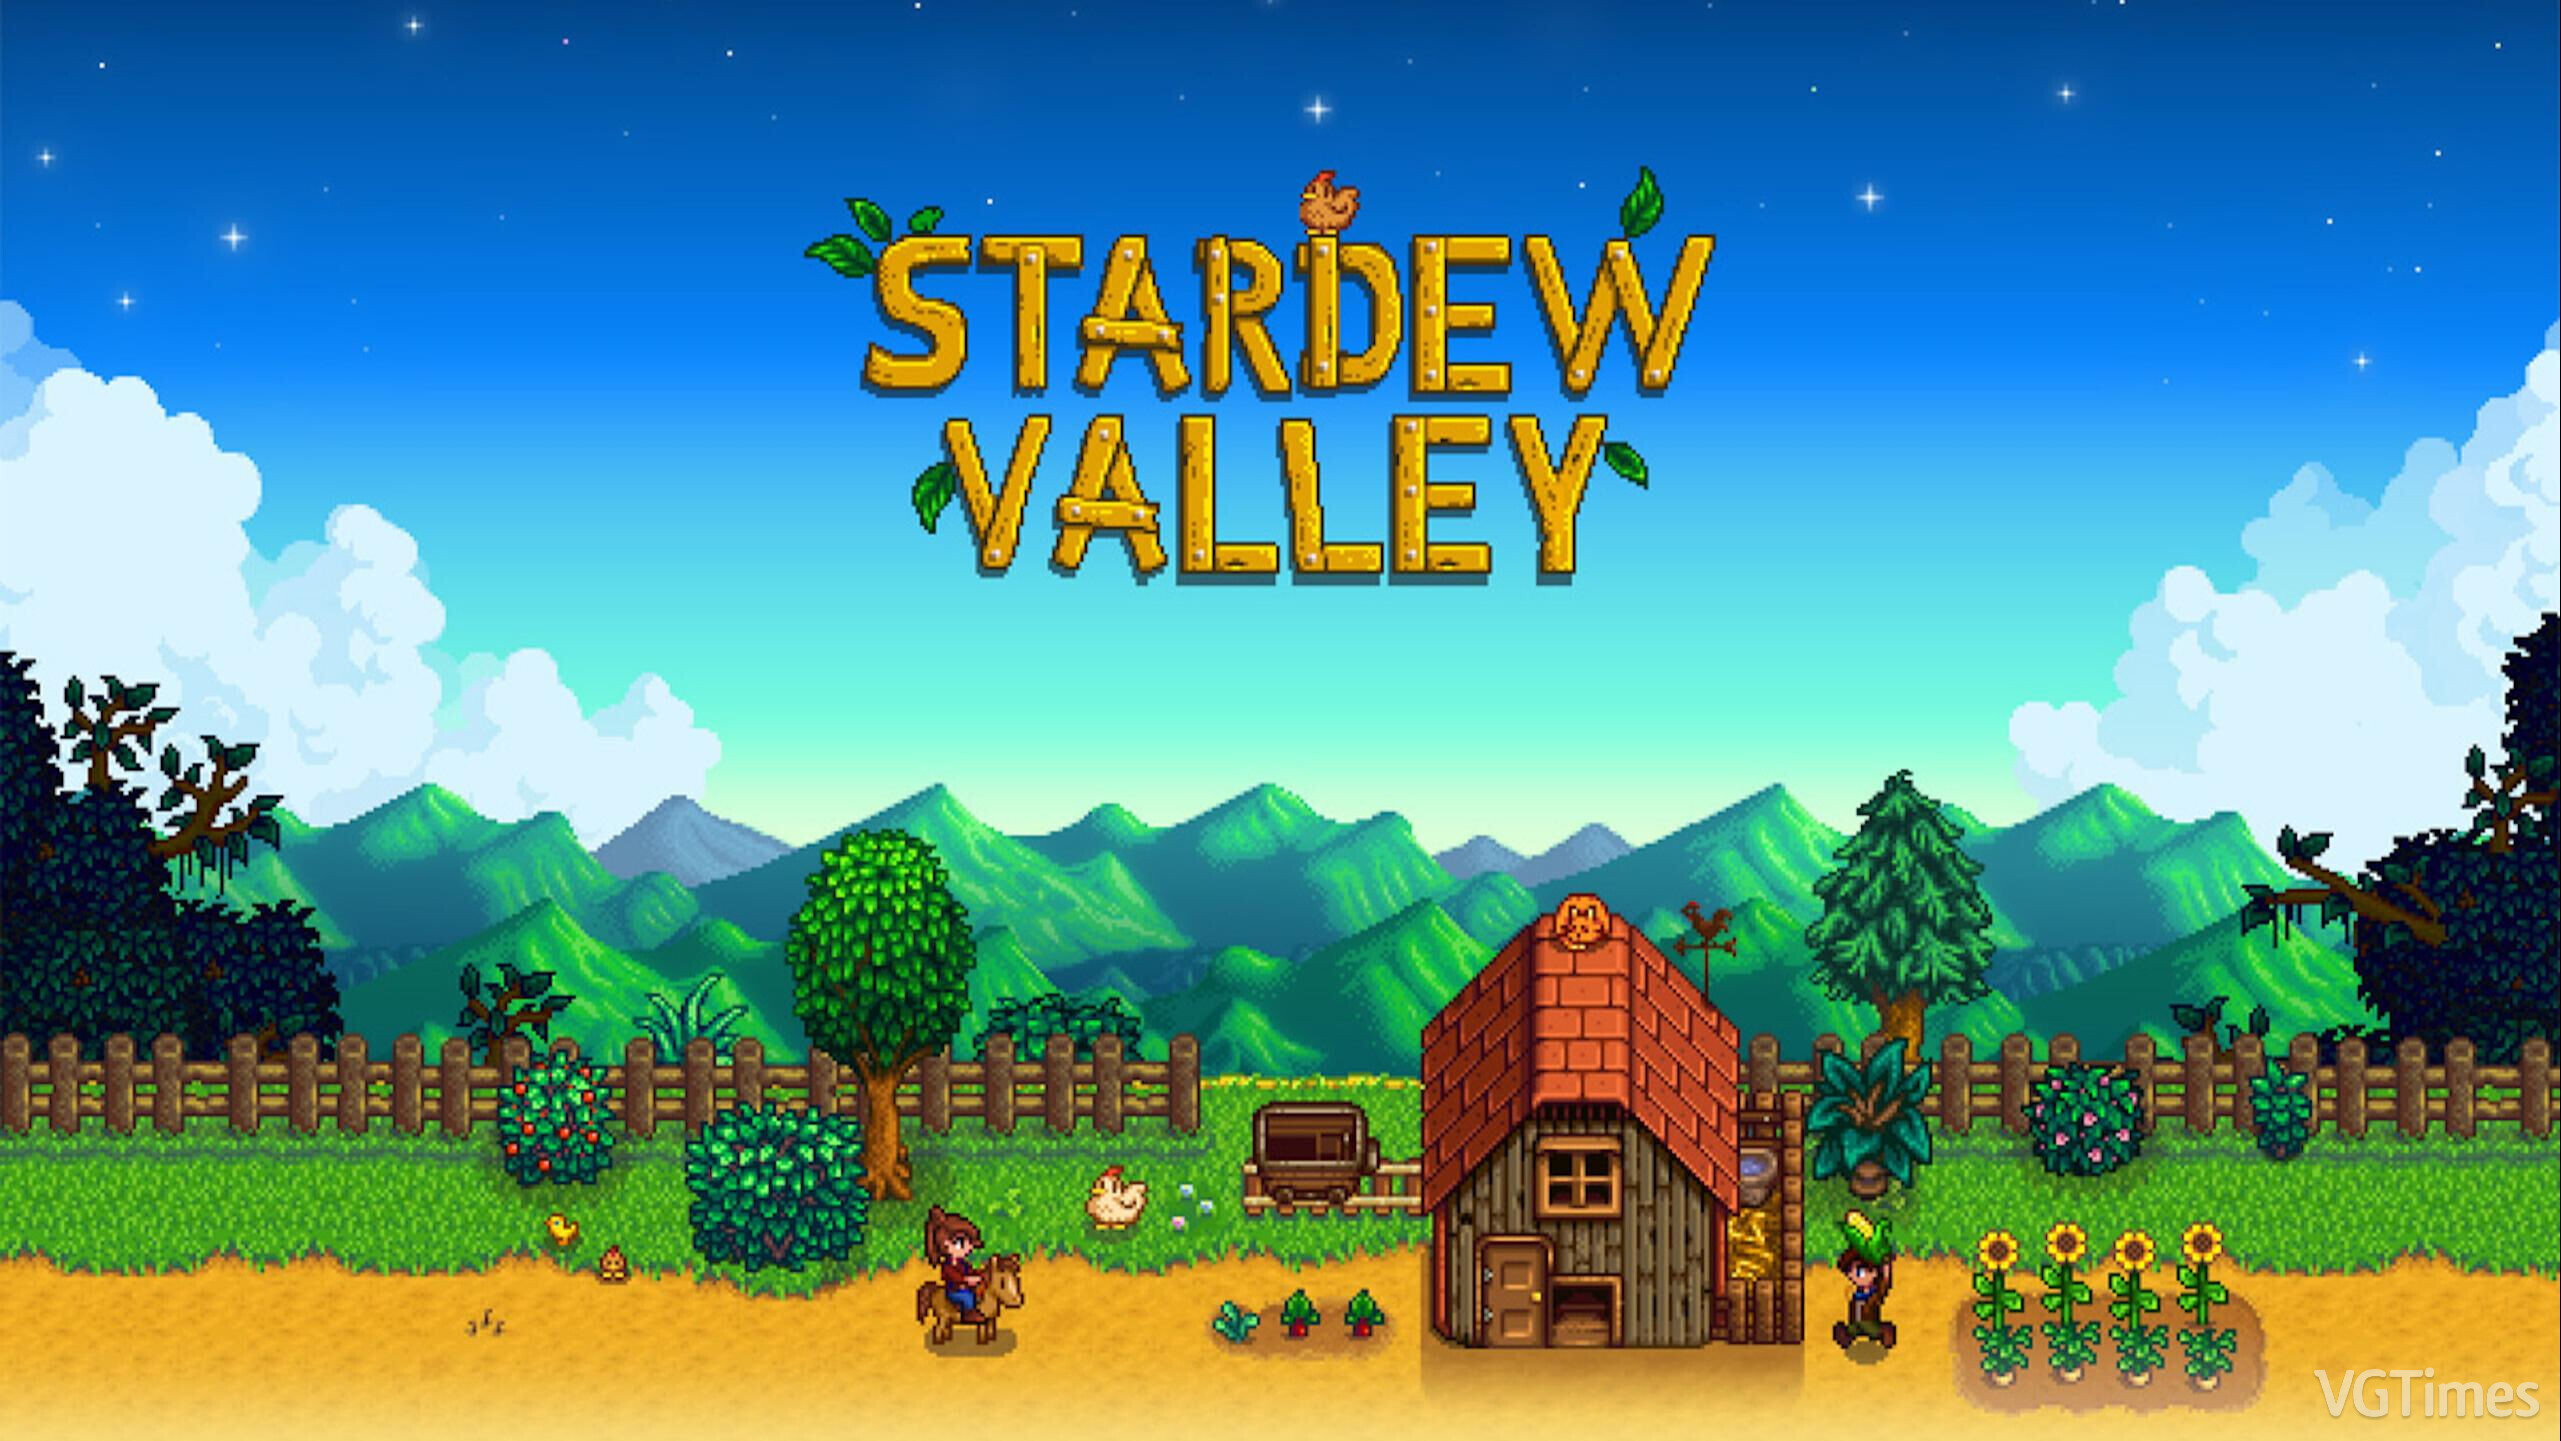 Stardew village. Stardew Valley обложка. Stardew Valley (2016). Stardew Valley плакат. Игра Стардью Валли.